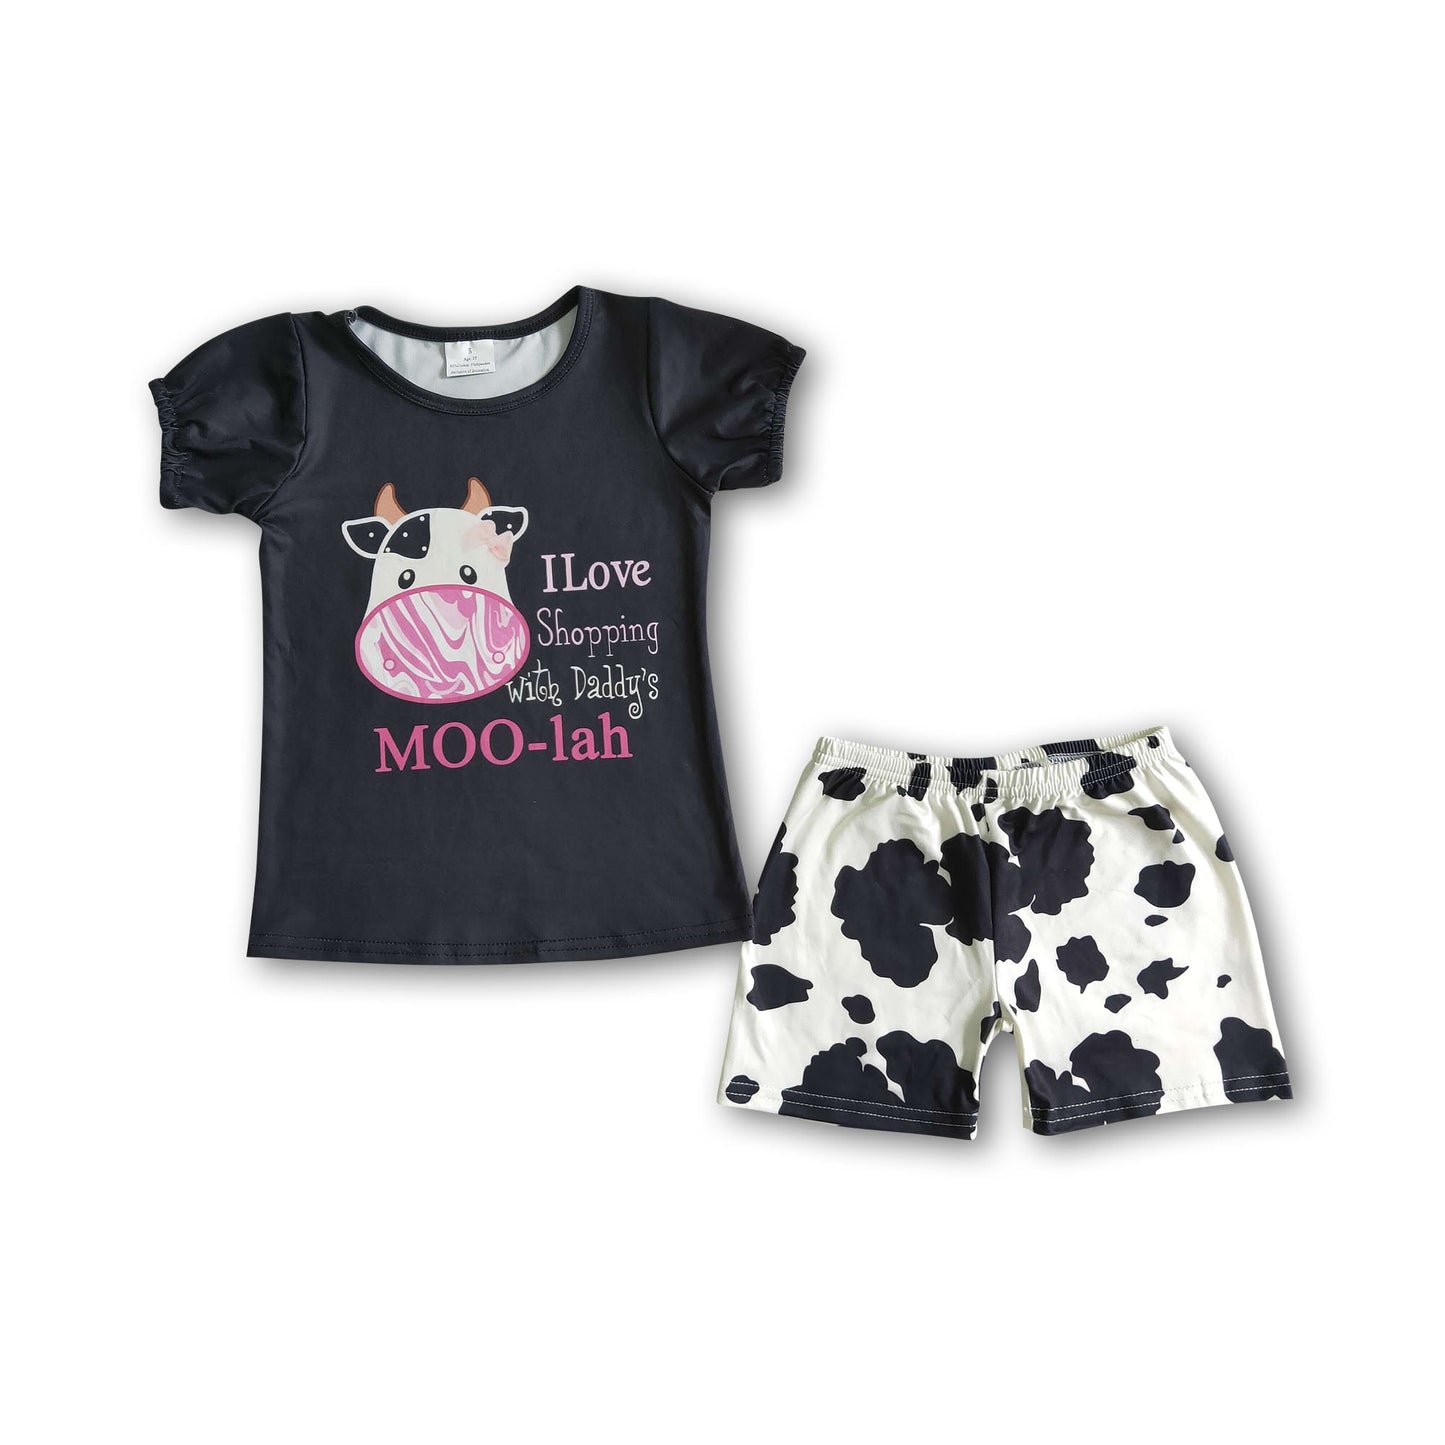 Moo-lah shirt cow print shorts kids girls clothes